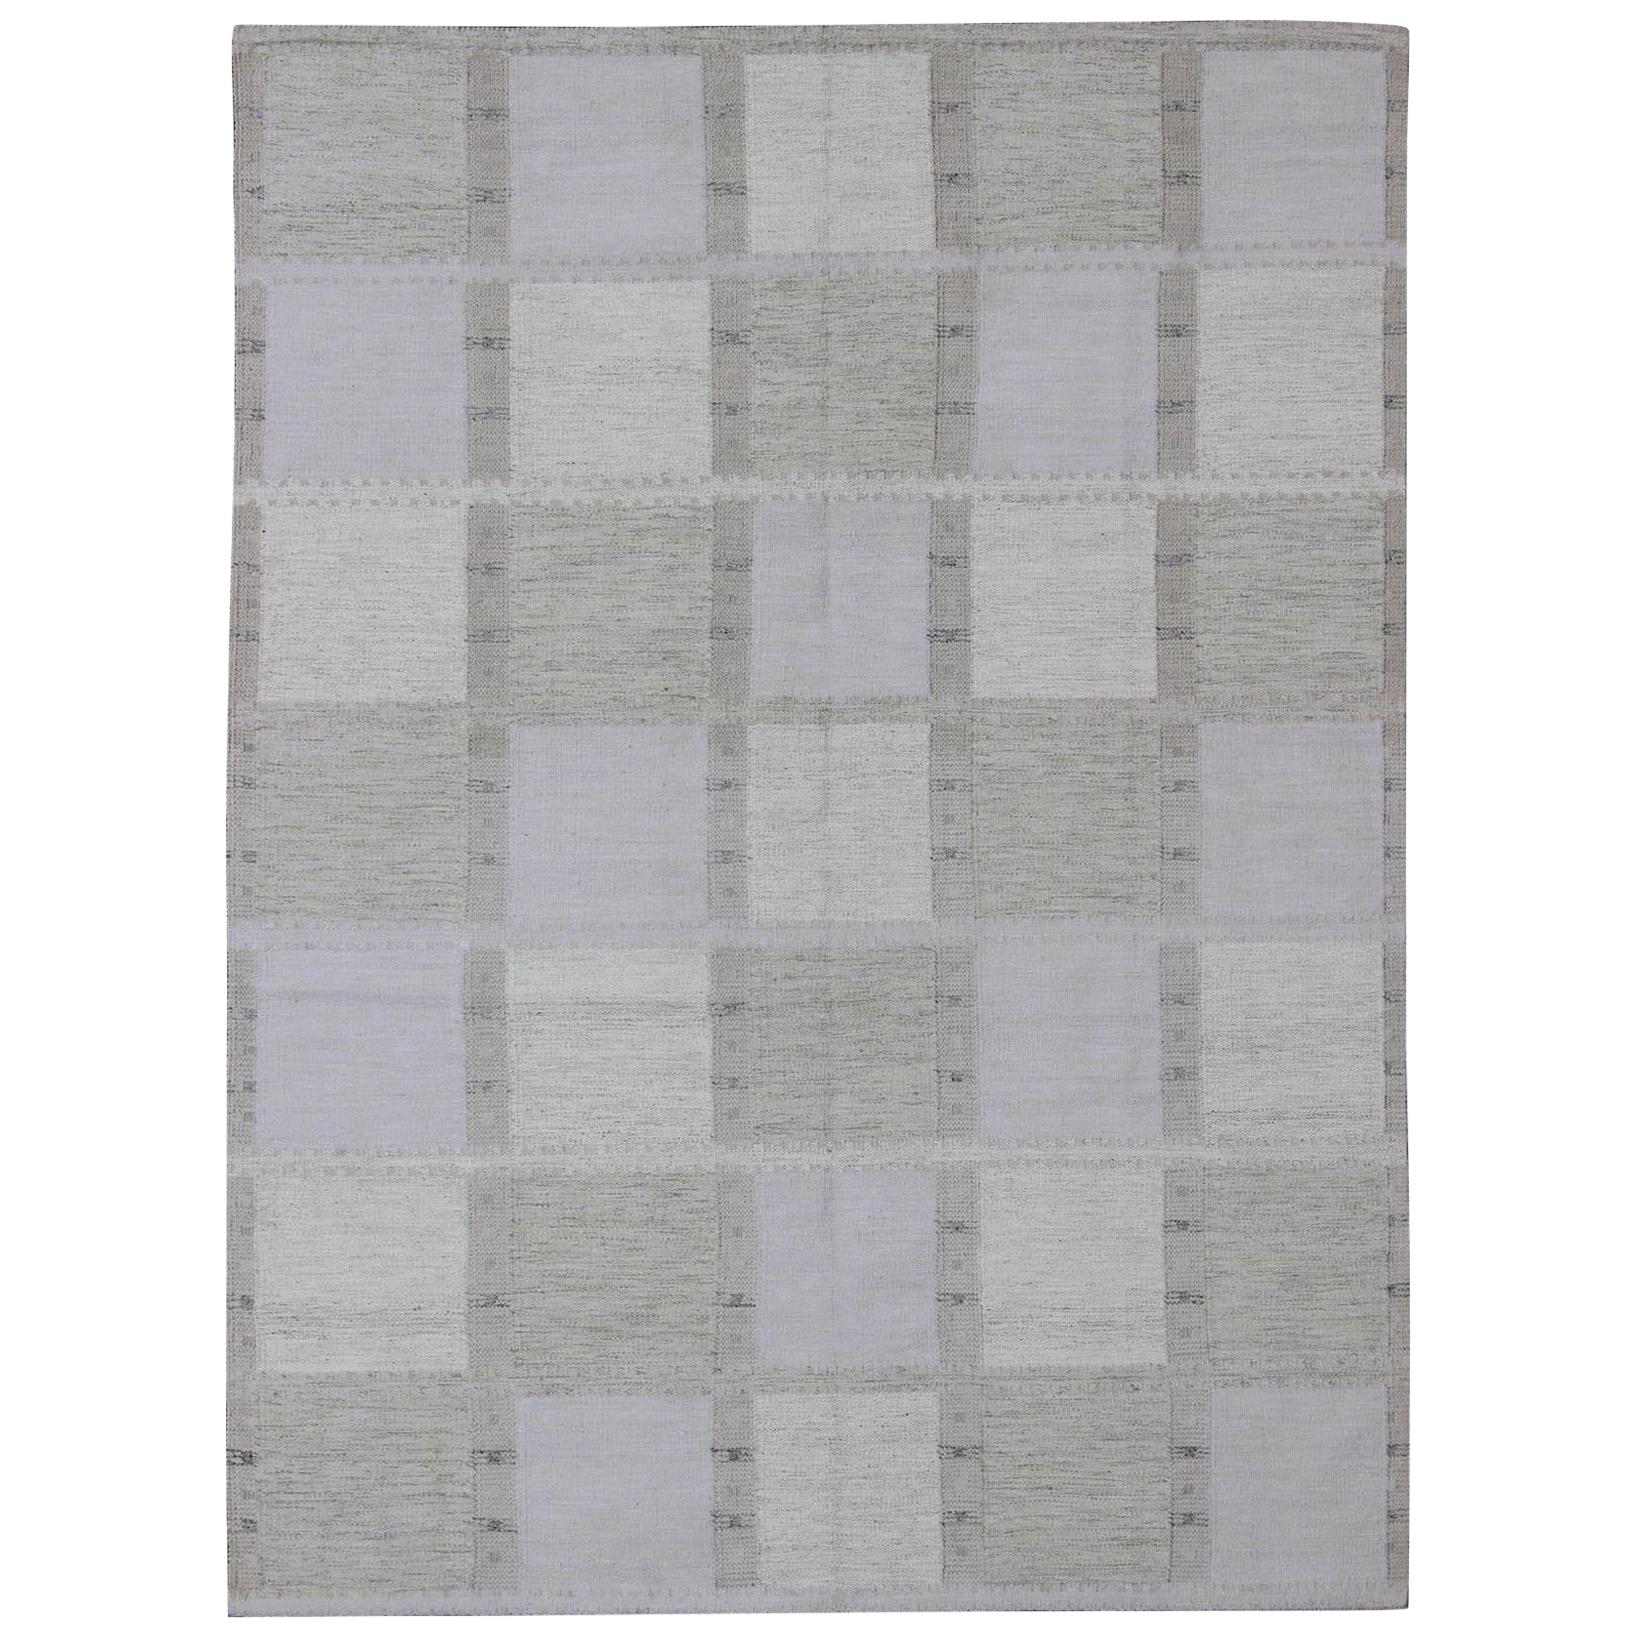 Modern Scandinavian Flat-Weave Rug Design with Checkerboard Design in Gray Tones For Sale